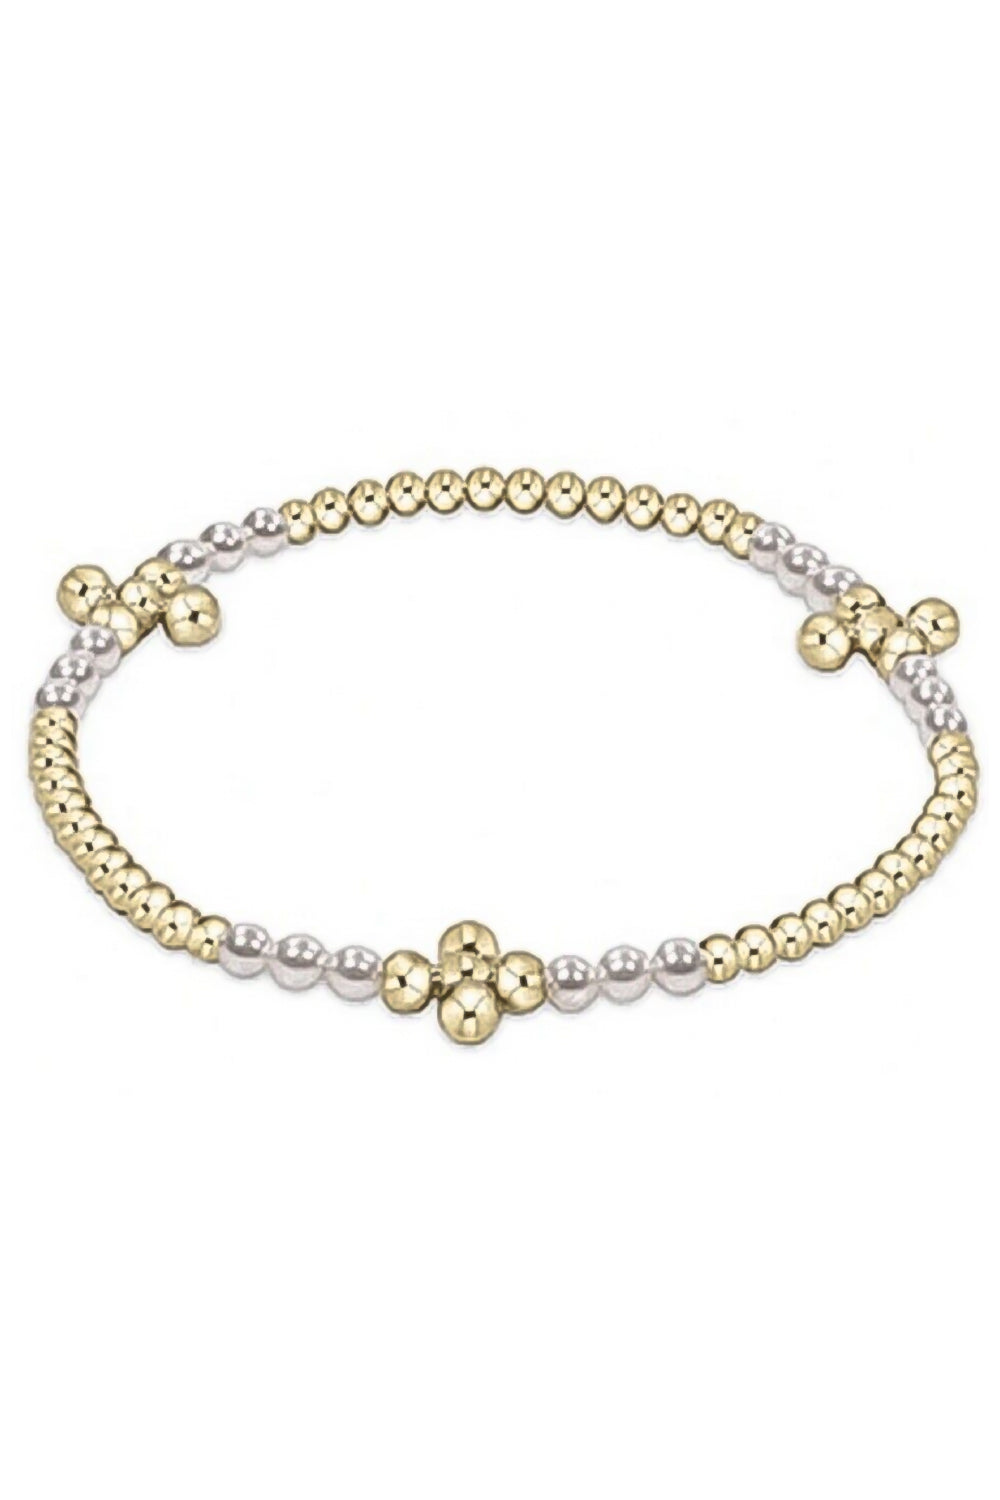 enewton: Signature Cross Gold Bliss Pattern 2.5mm Bead Bracelet - Pearl | Makk Fashions